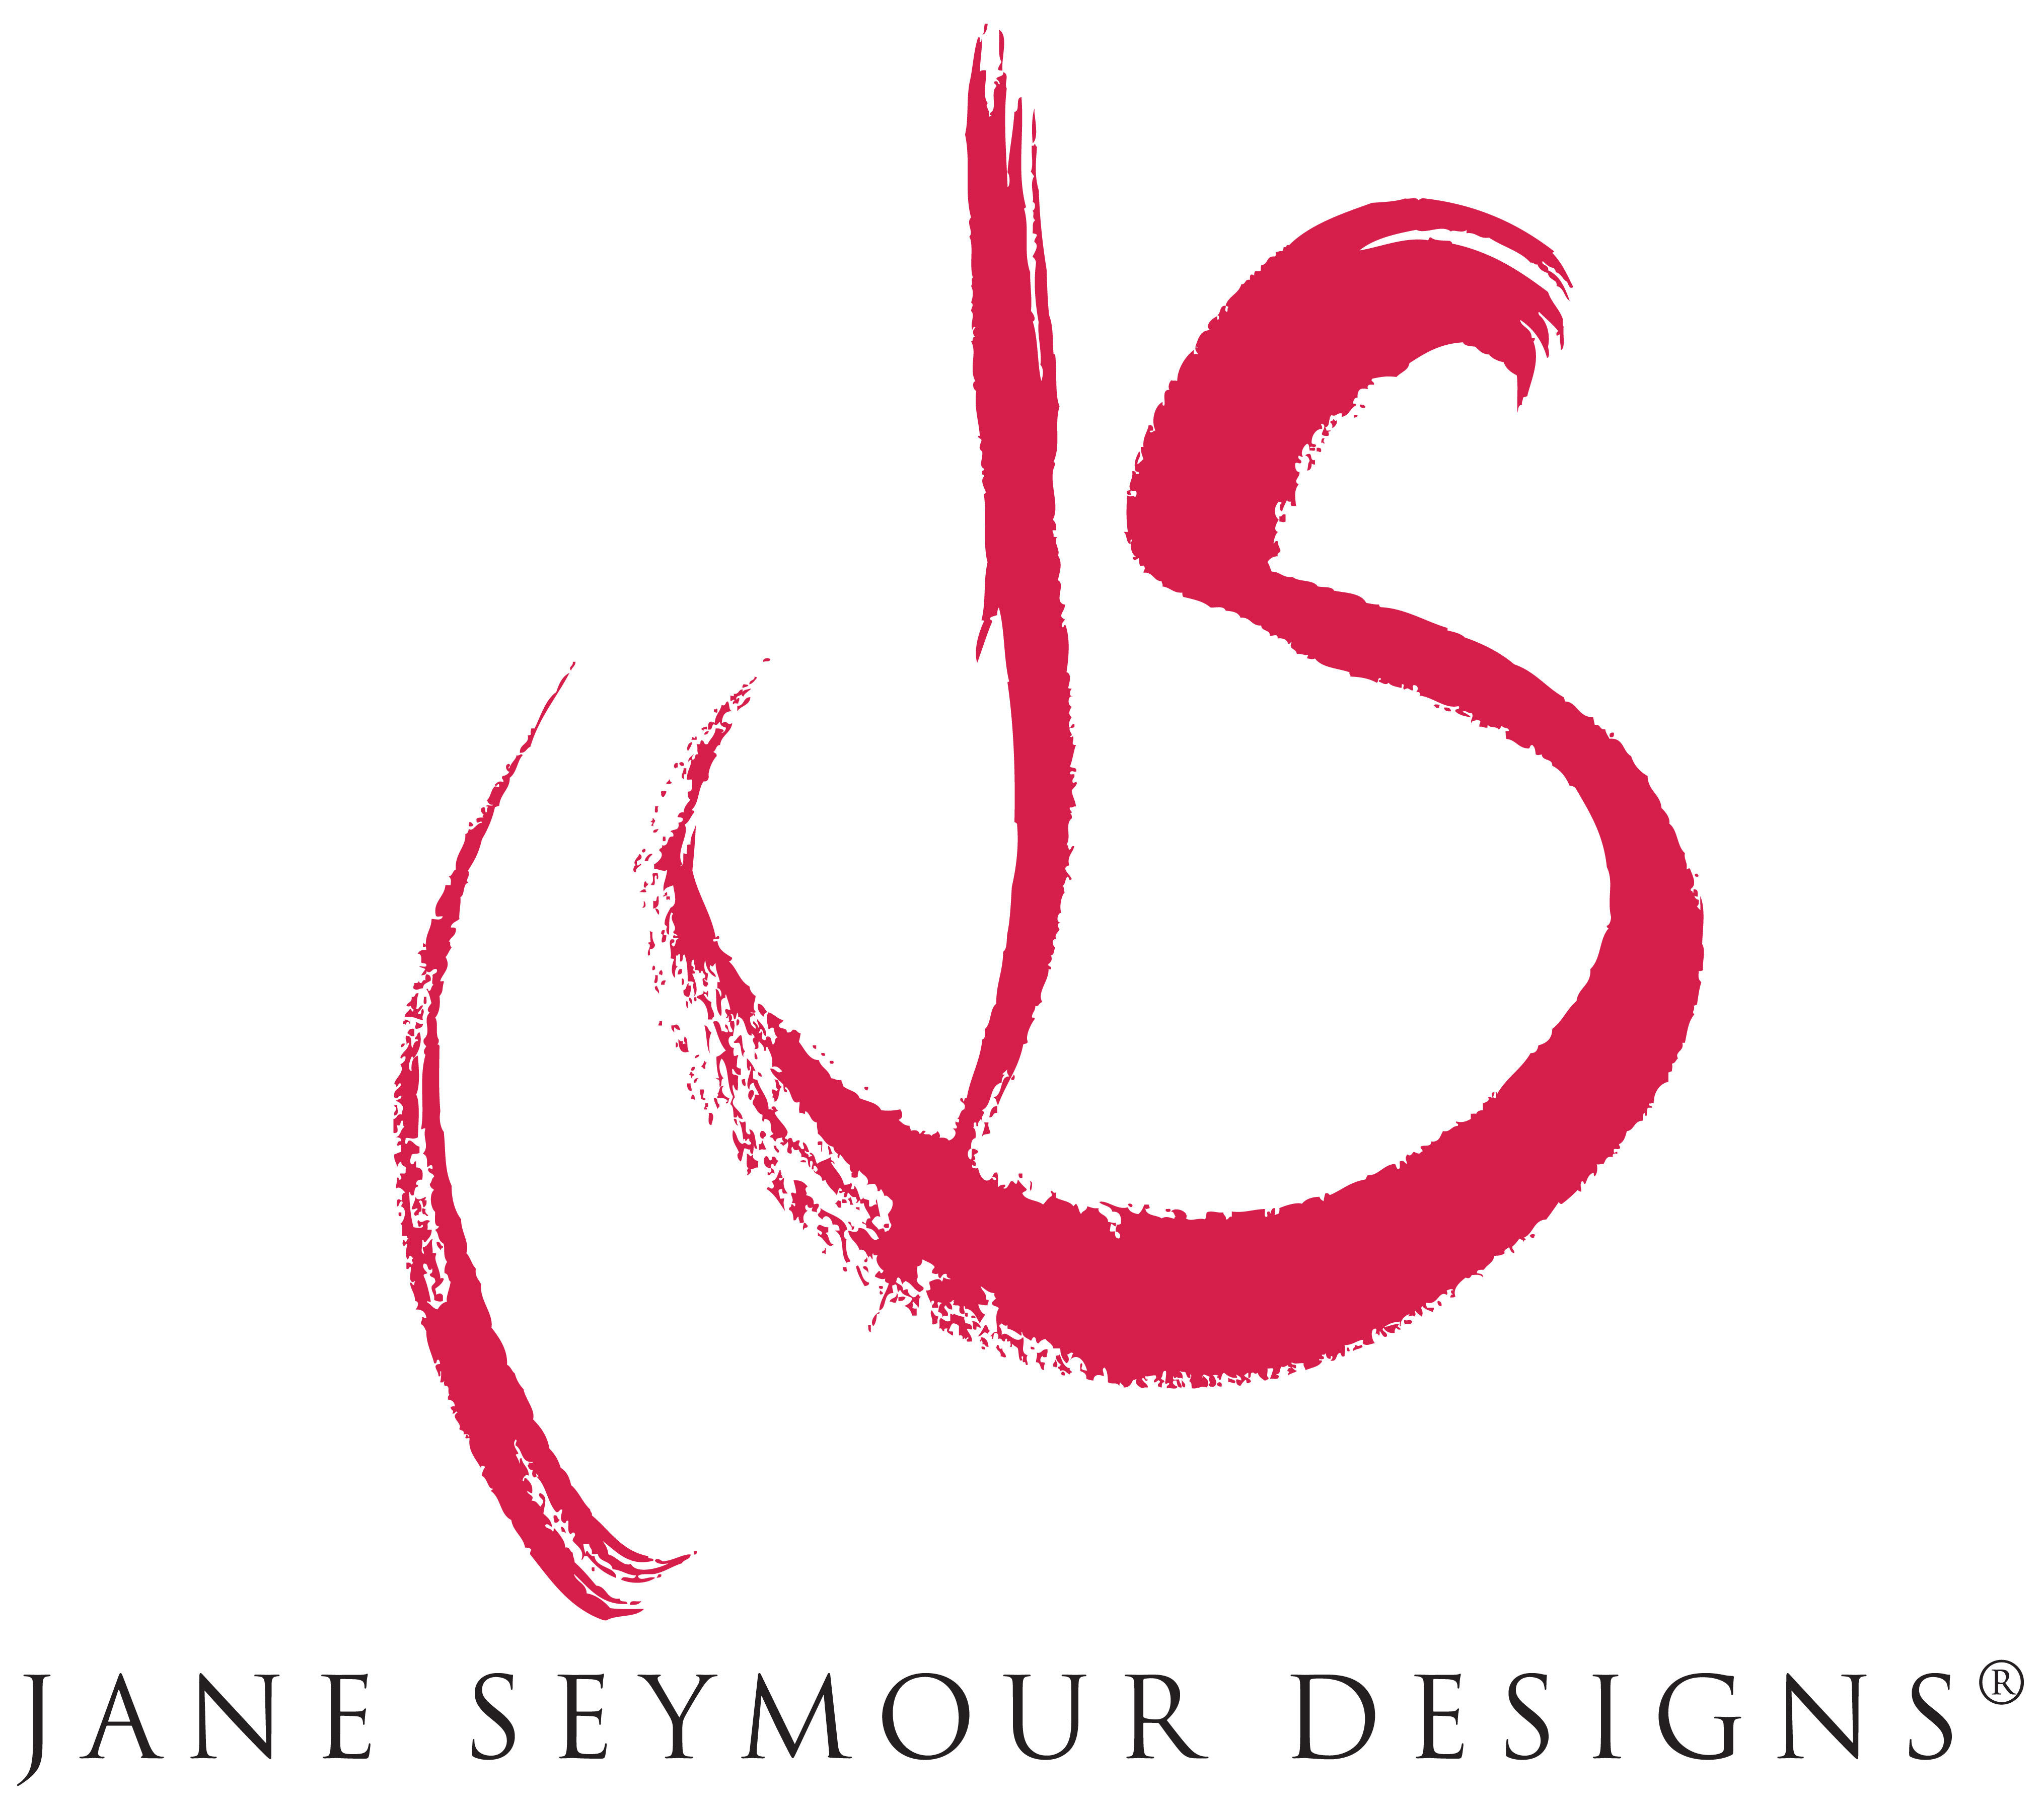 Jane Seymour Designs